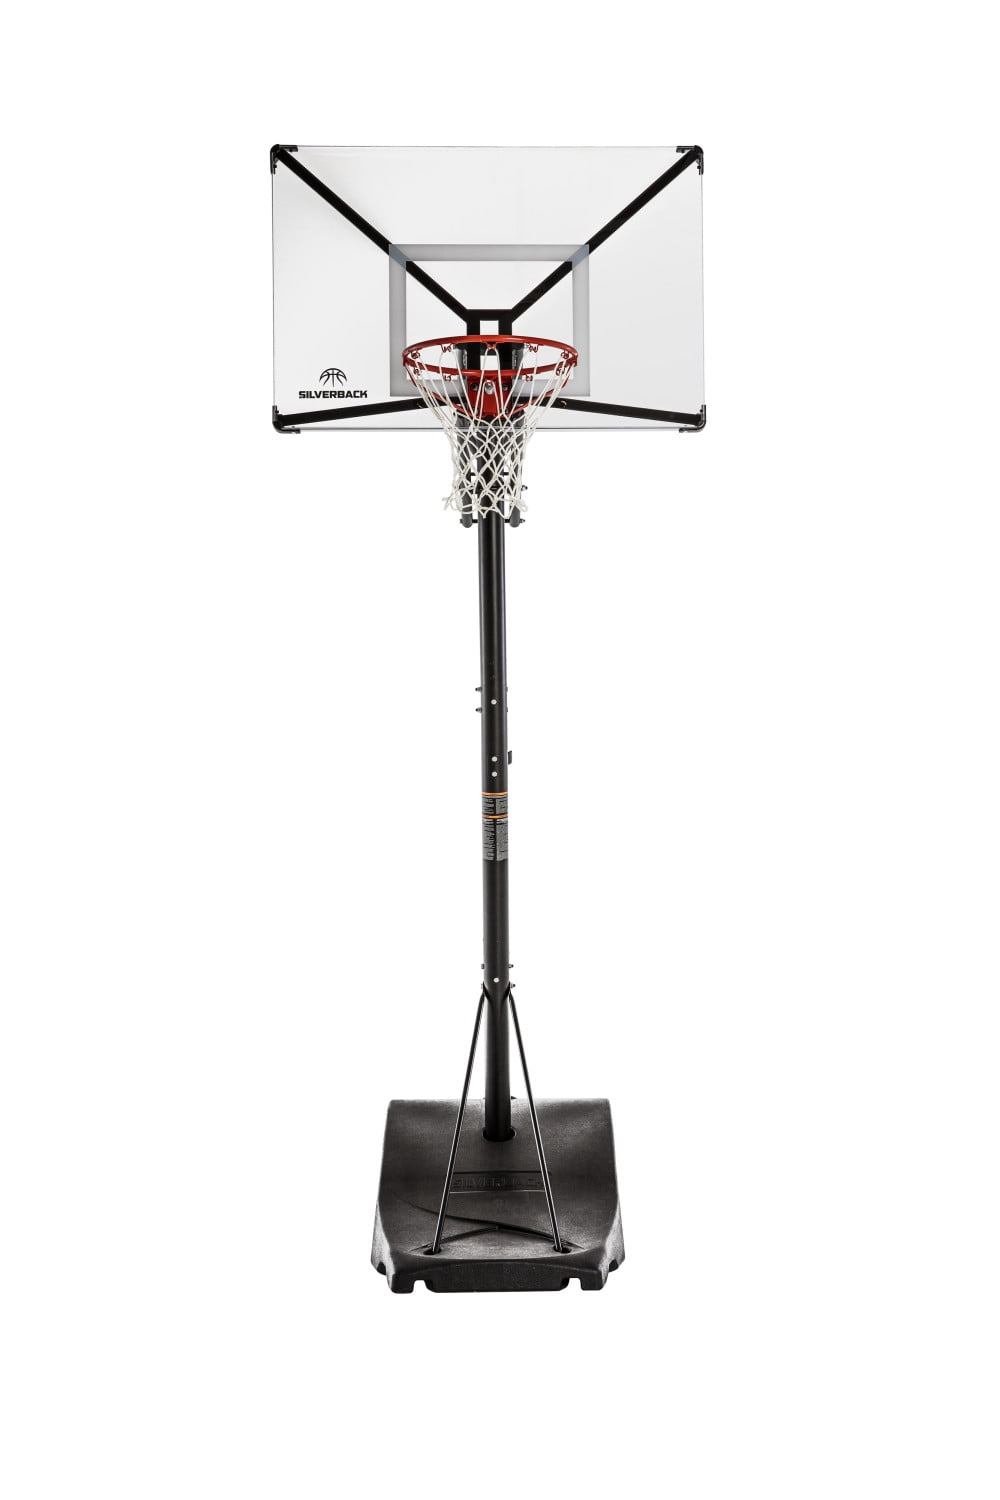 Silverback NXT 50 Hoop Backboard Portable Basketball In. Height-Adjustable System